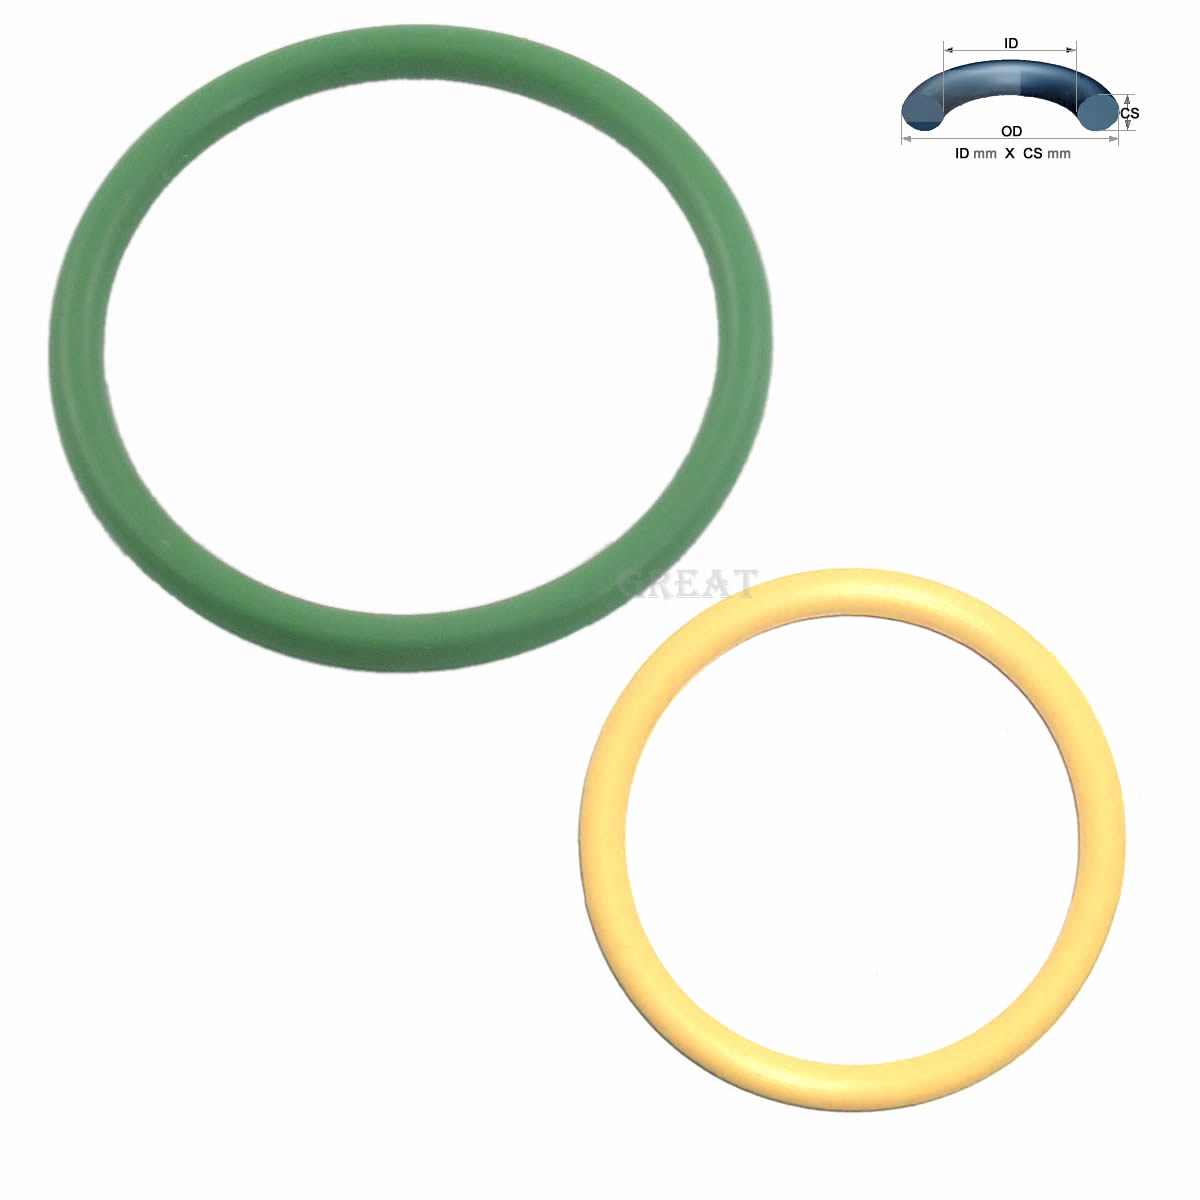 5X0.8 Oring 5mm ID X 0.8mm CS EPDM Ethylene Propylene FKM FPM Fluorocarbon NBR Nitrile VMQ Silicone O ring O-ring Sealing Rubber